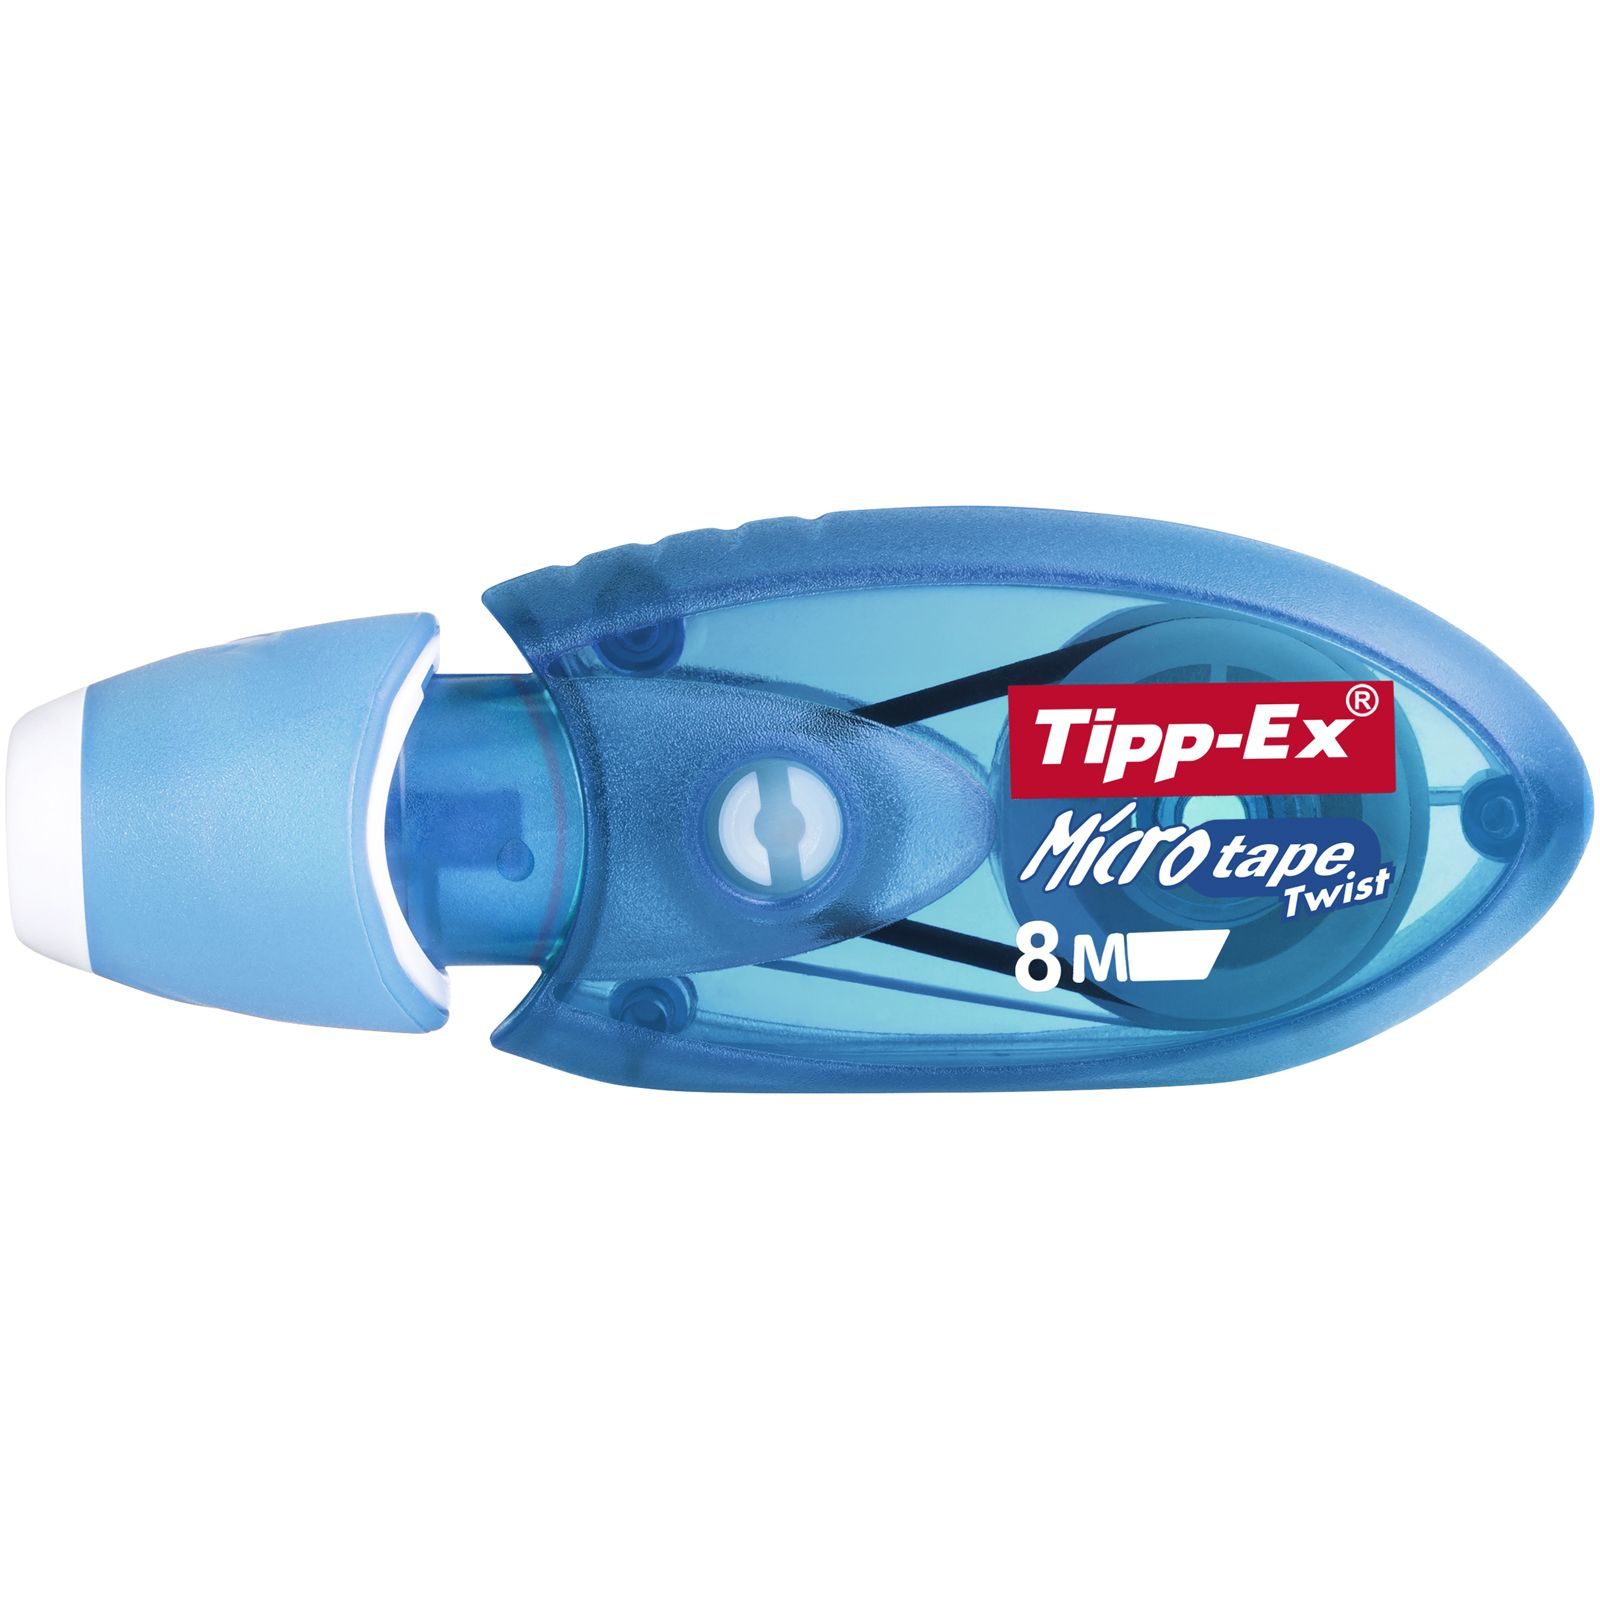 TIPP-EX Micro Tape Twist correction tape 8 m Blue 10 pc(s)